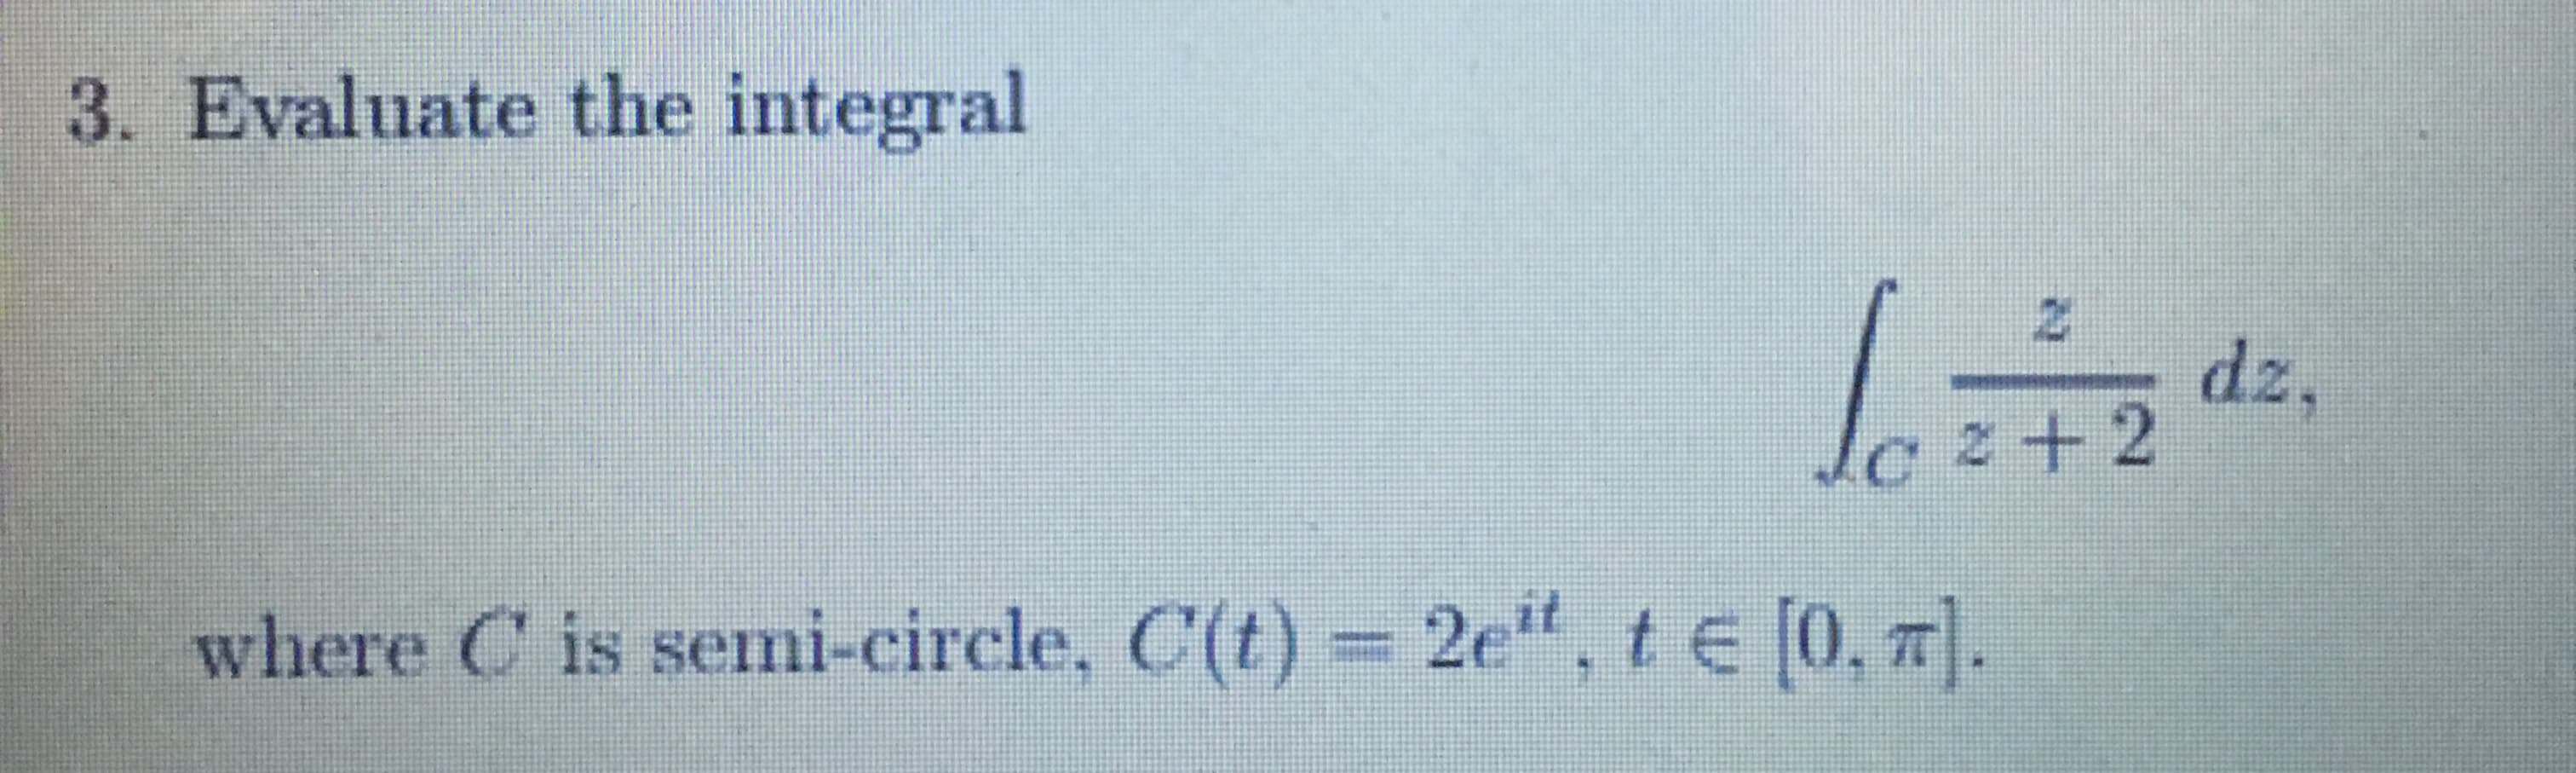 Evaluate the integral
dz,
le z+2
where C is semi-circle, C(t) 2e", te [0, 7].
